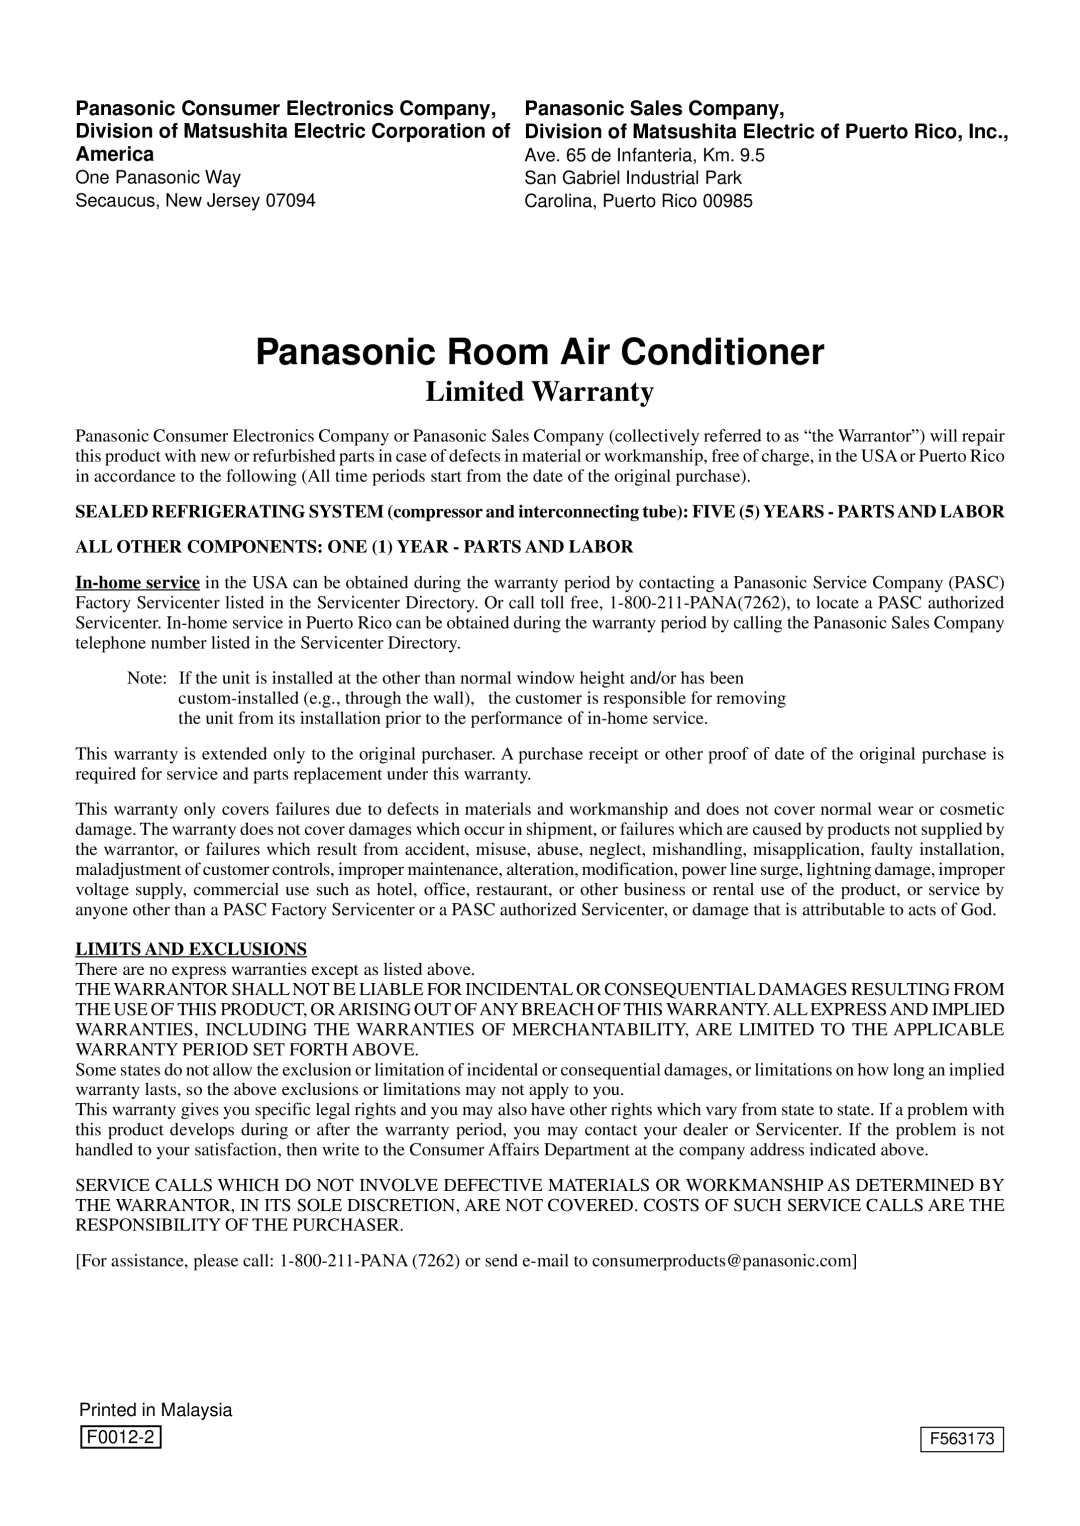 Panasonic CW-C120AU Panasonic Room Air Conditioner, Limited Warranty, Panasonic Consumer Electronics Company, America 